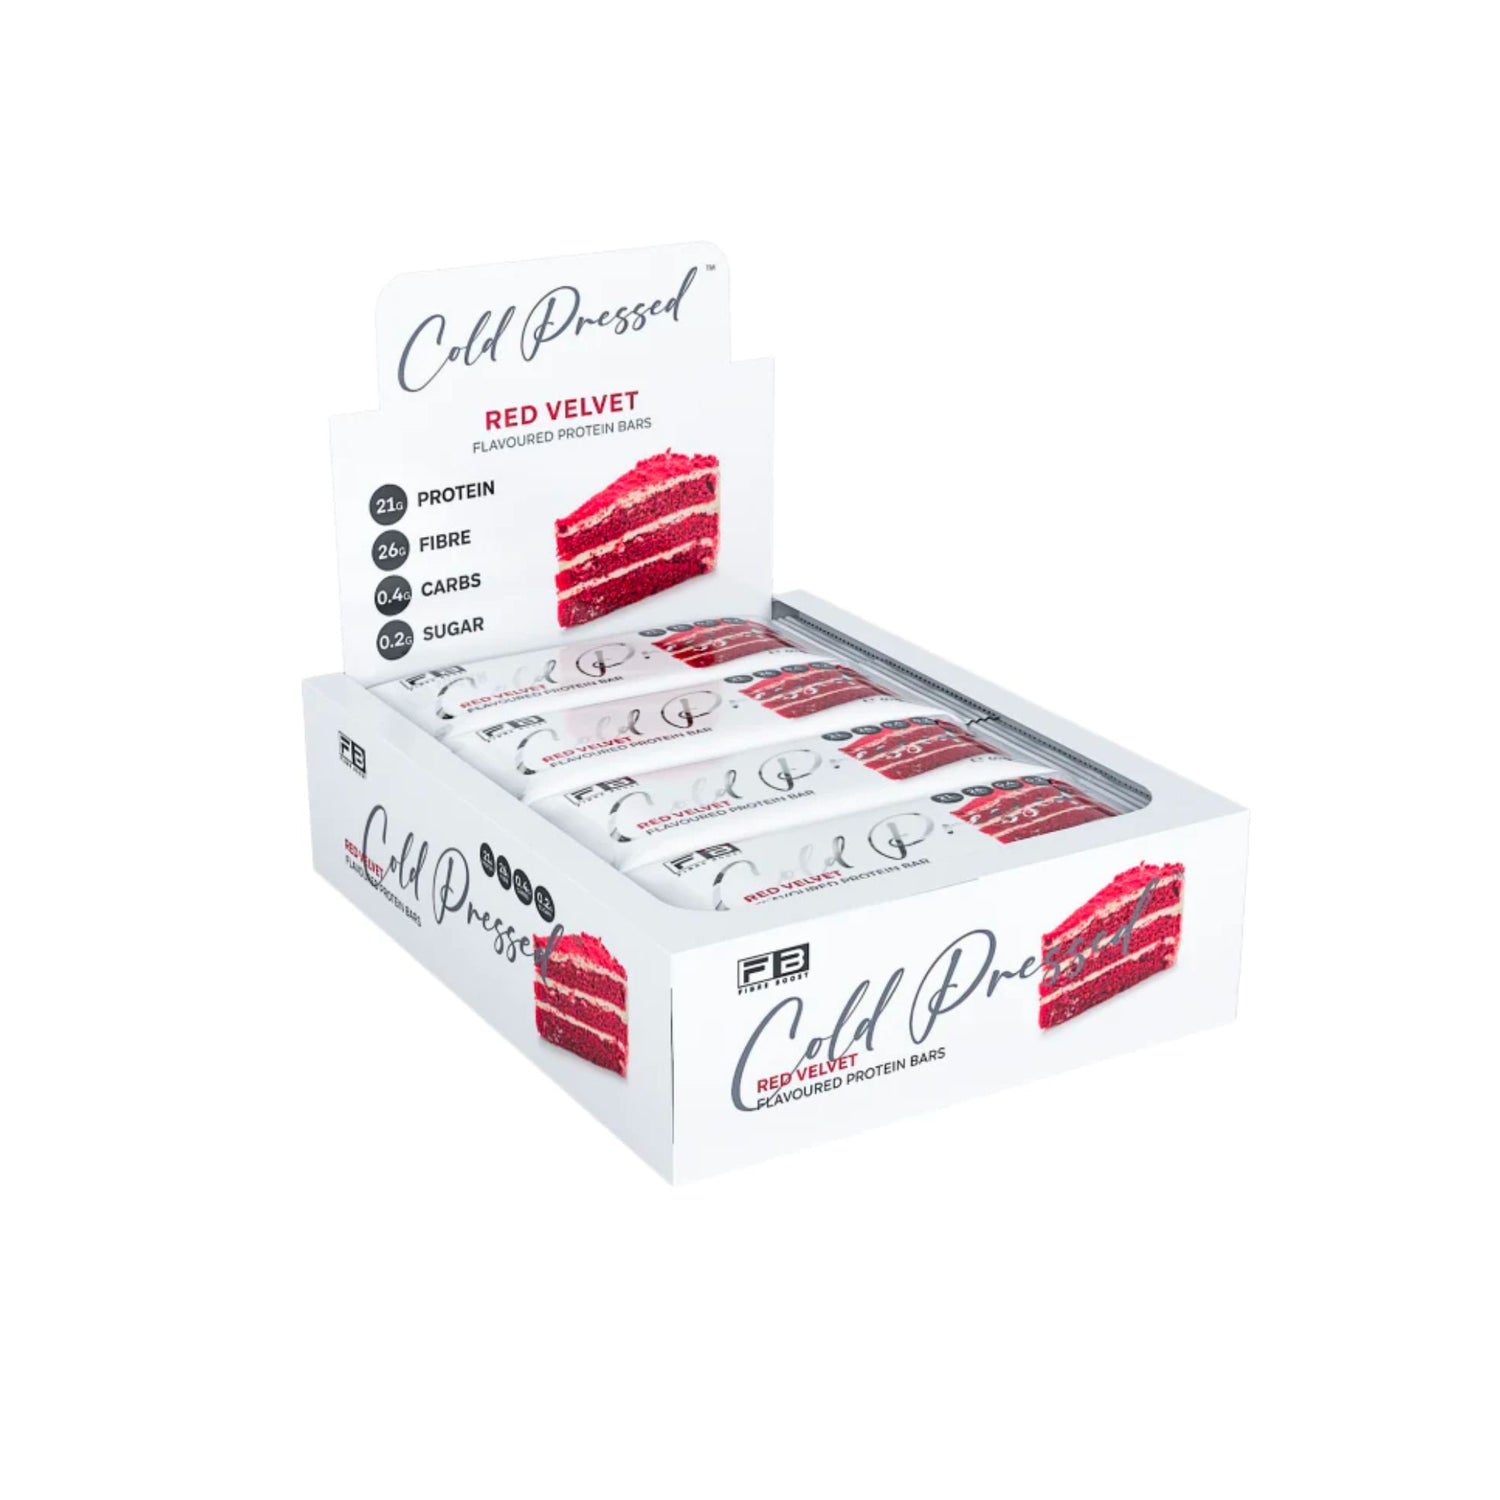 Fibre Boost Cold Pressed Bars - Box of 12 Red Velvet